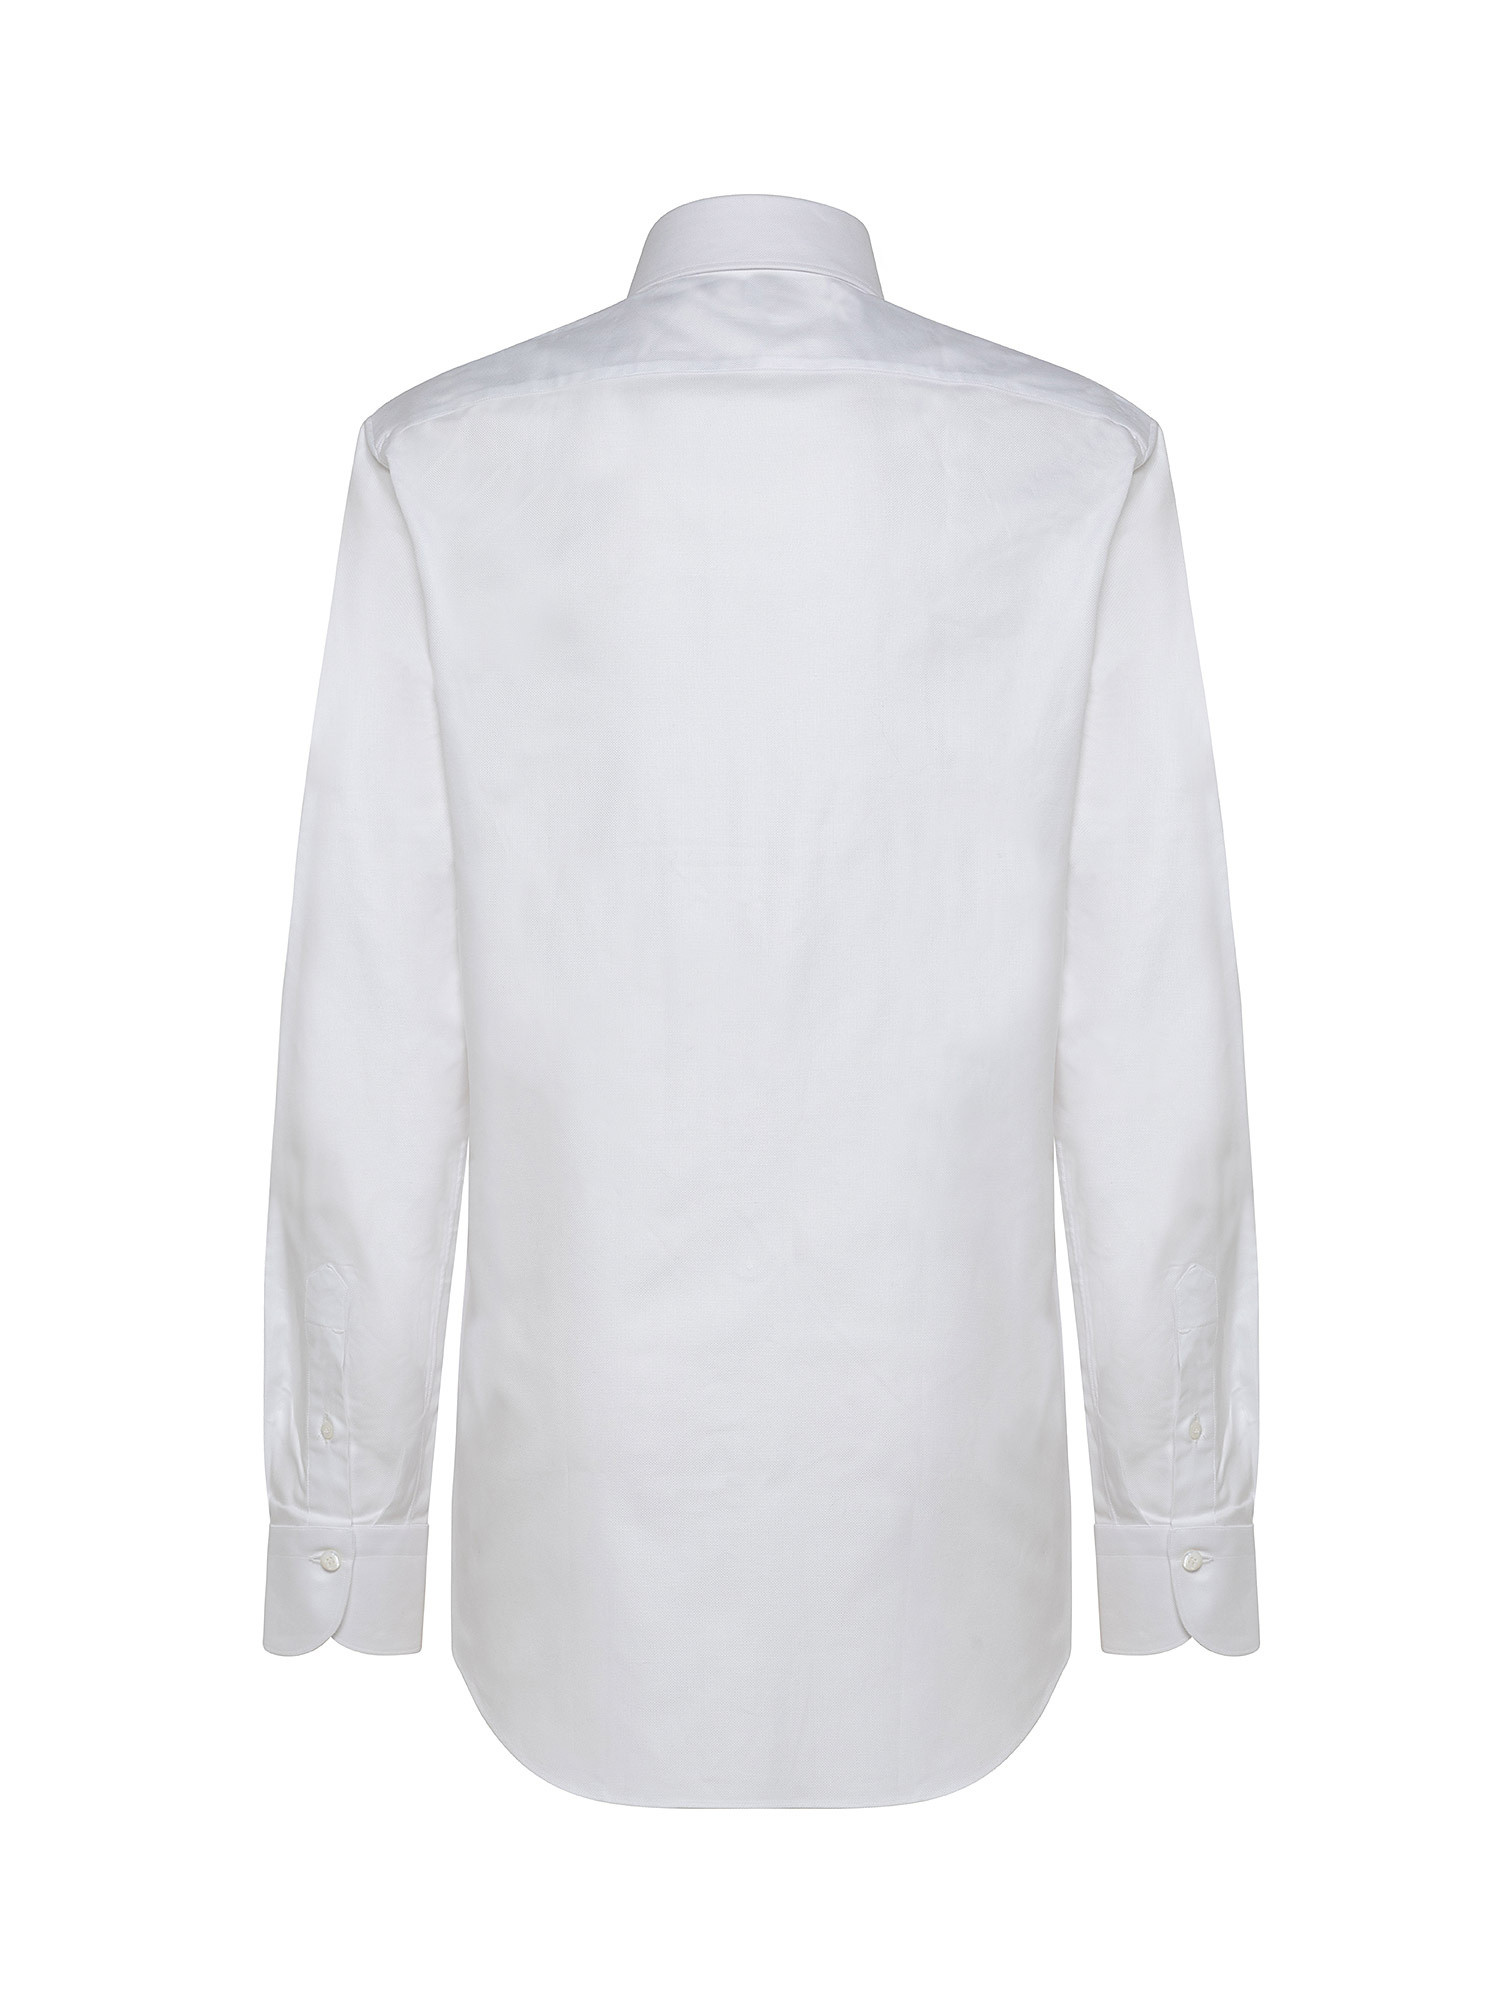 Camicia uomo slim fit, Bianco, large image number 1